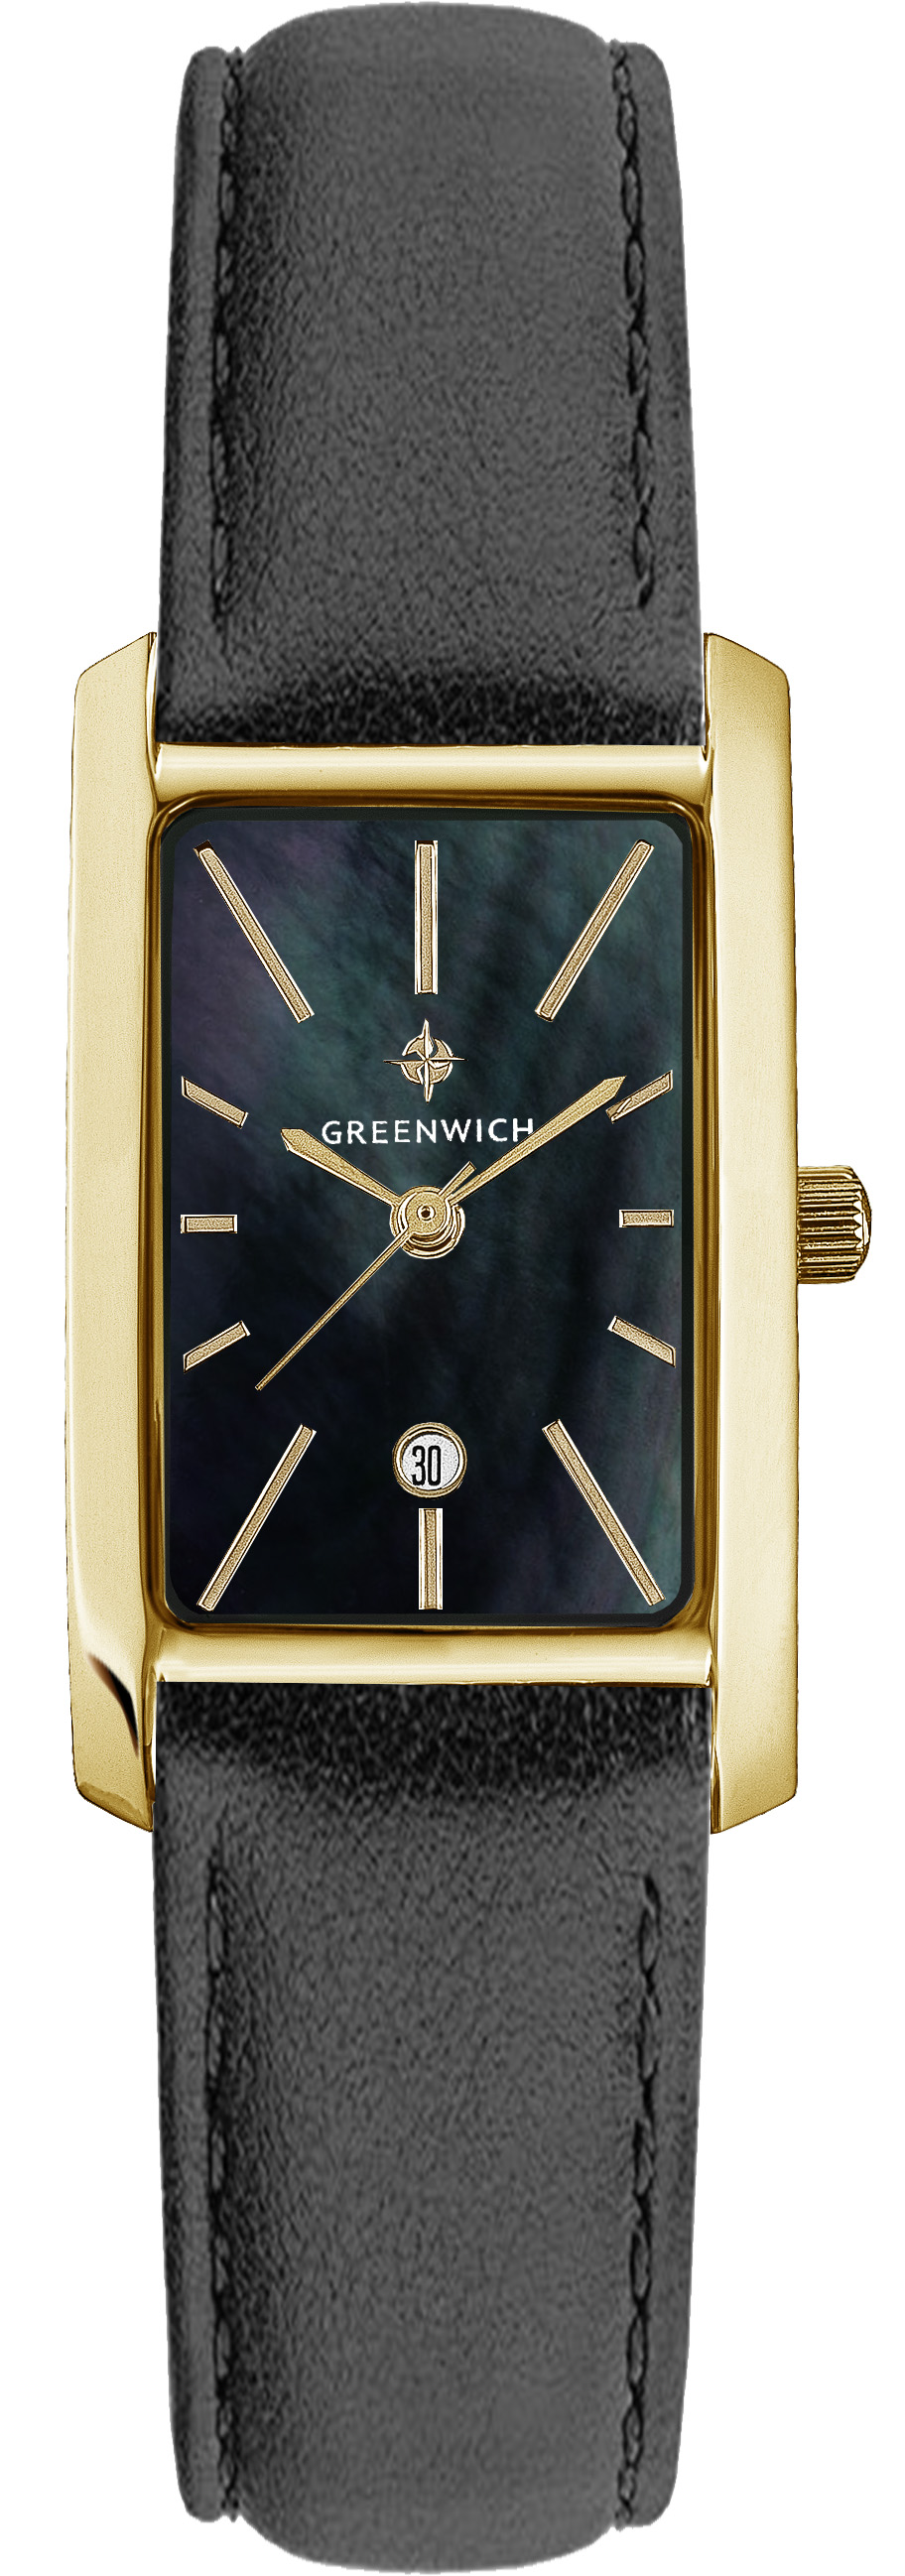 GW 511.21.11, женские часы Greenwich Vesta